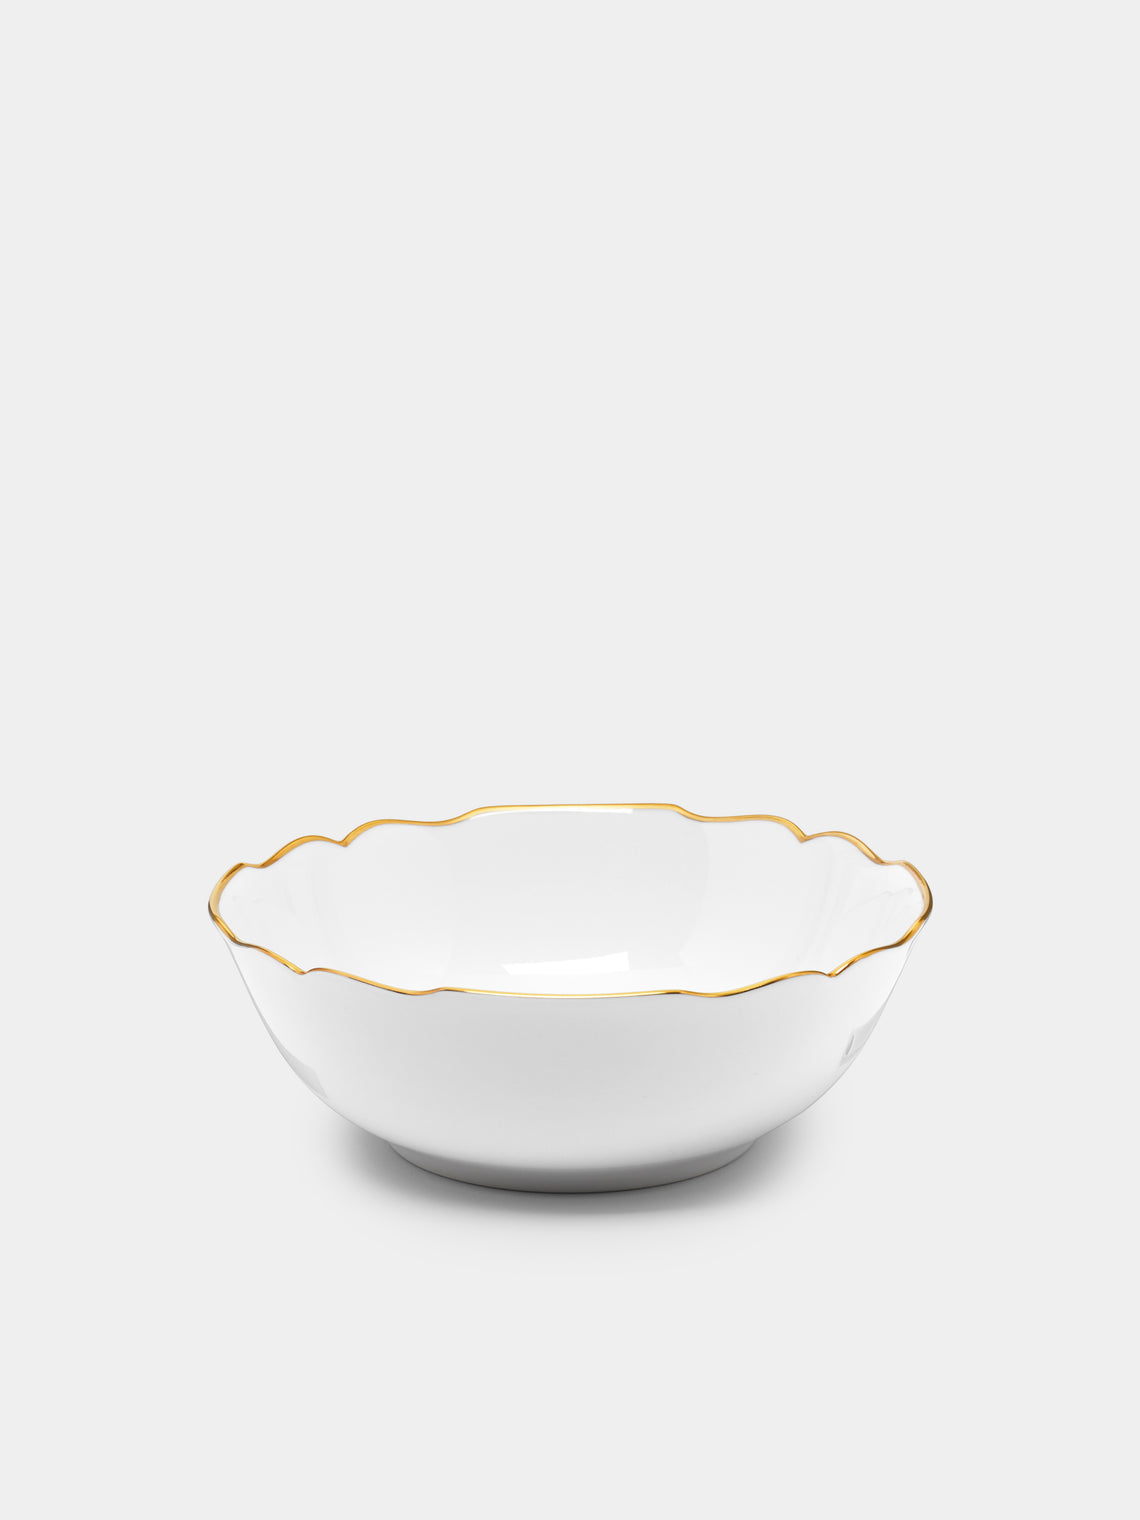 Augarten - Belvedere Hand-Painted Porcelain Bowl - White - ABASK - 